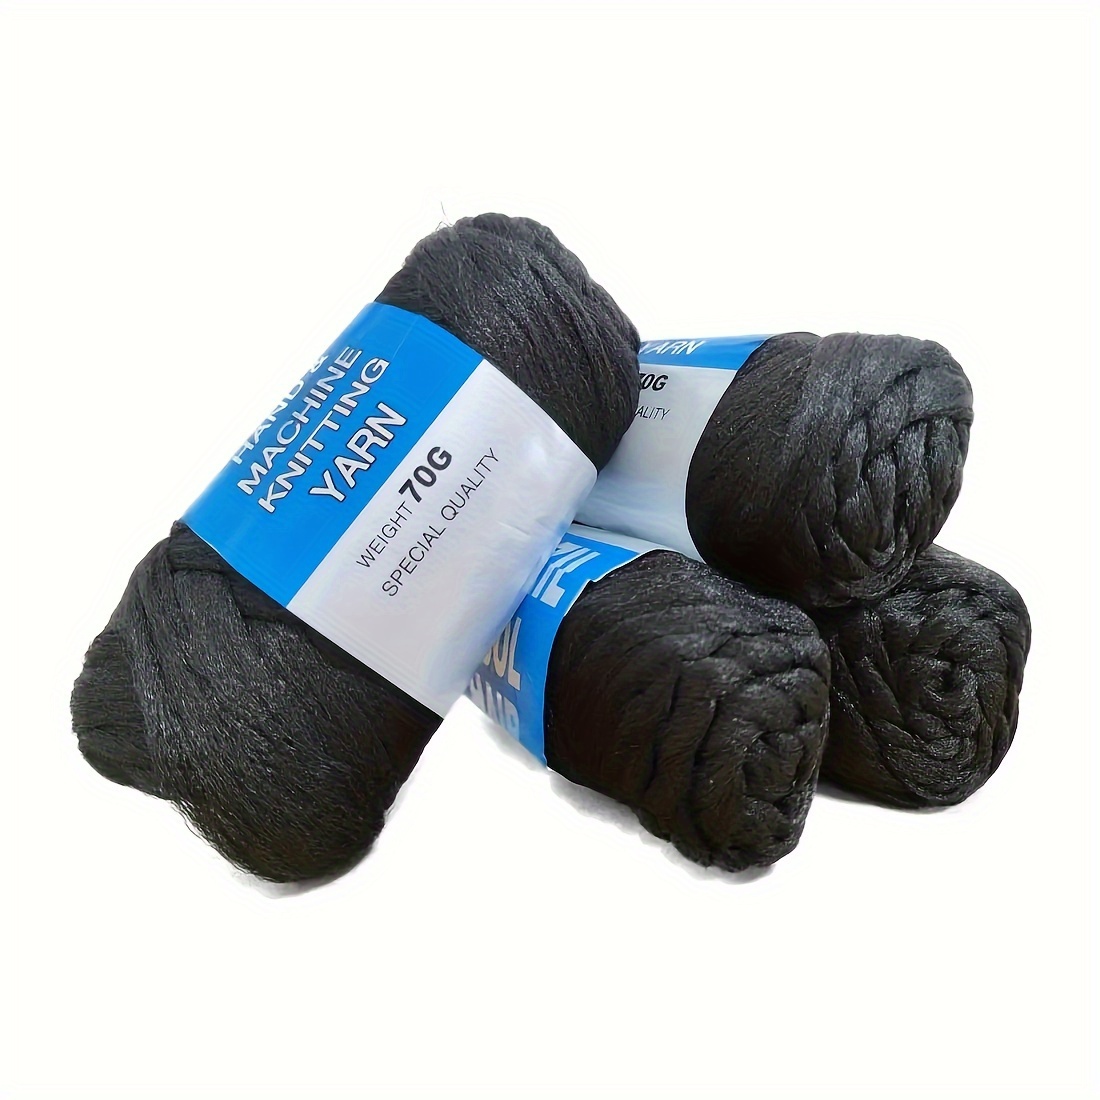 Brazilian wool - Black (1pc), FREE Delivery